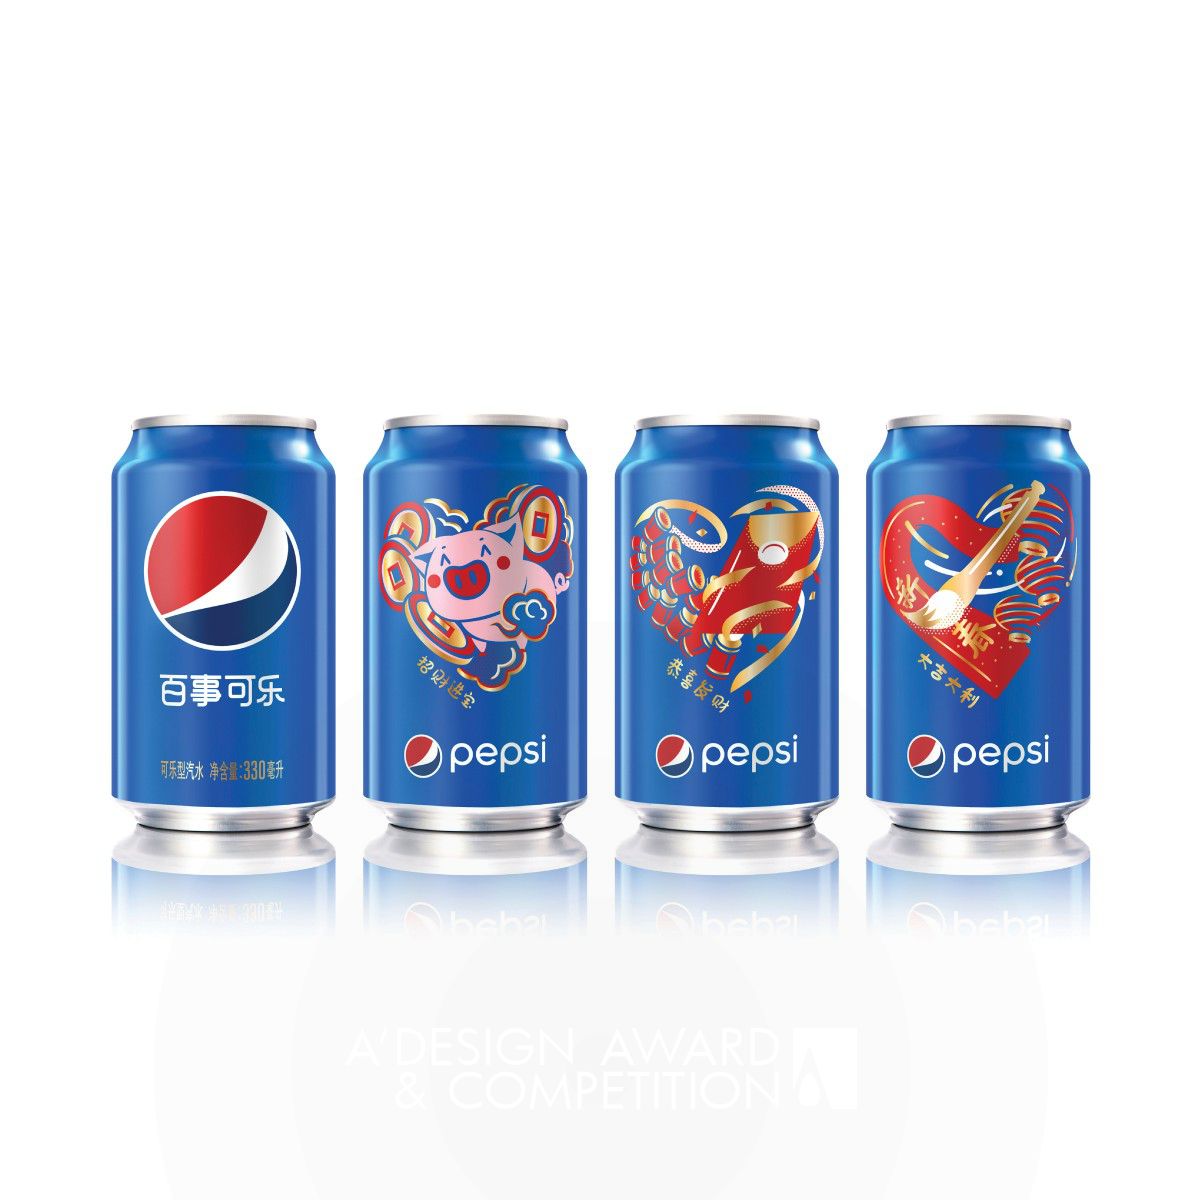 Pepsi Year of the Pig Ltd Ed Beverage Packaging by PepsiCo Design & Innovation Silver Packaging Design Award Winner 2019 